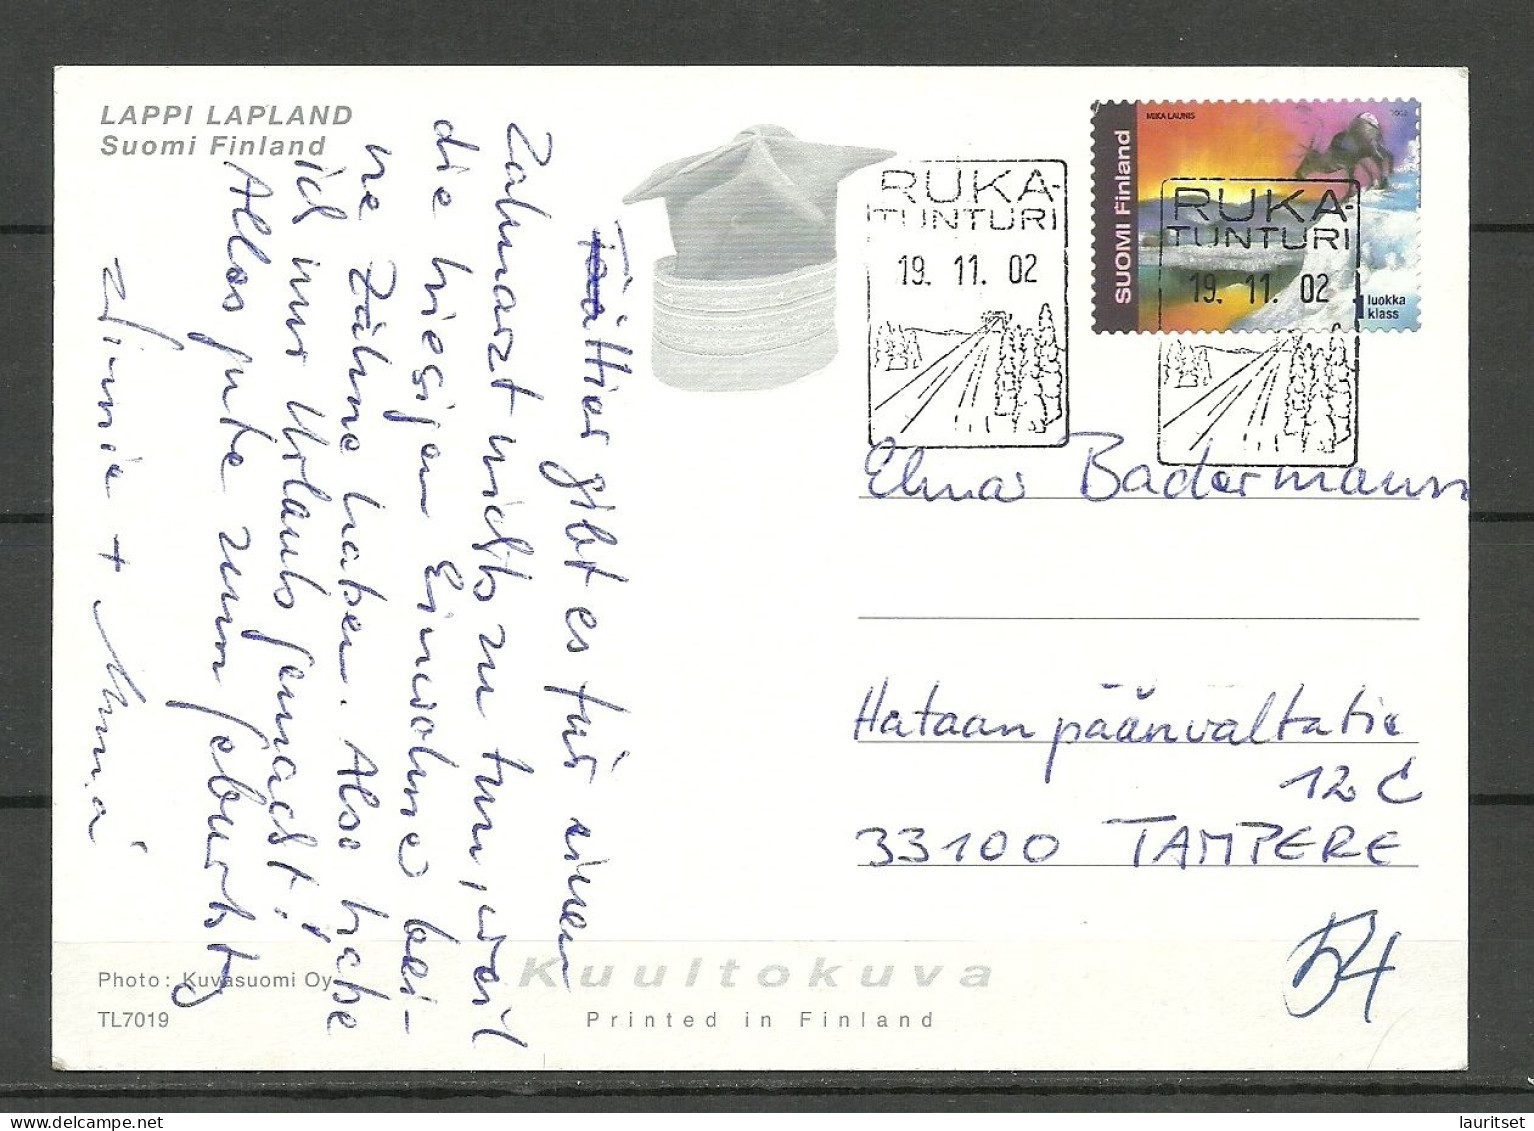 FINLAND 2002 Lappi Old Man Lapland Special Cancel RUKATUNTURI Sonderstempel, Domestically Sent Post Card - Europe